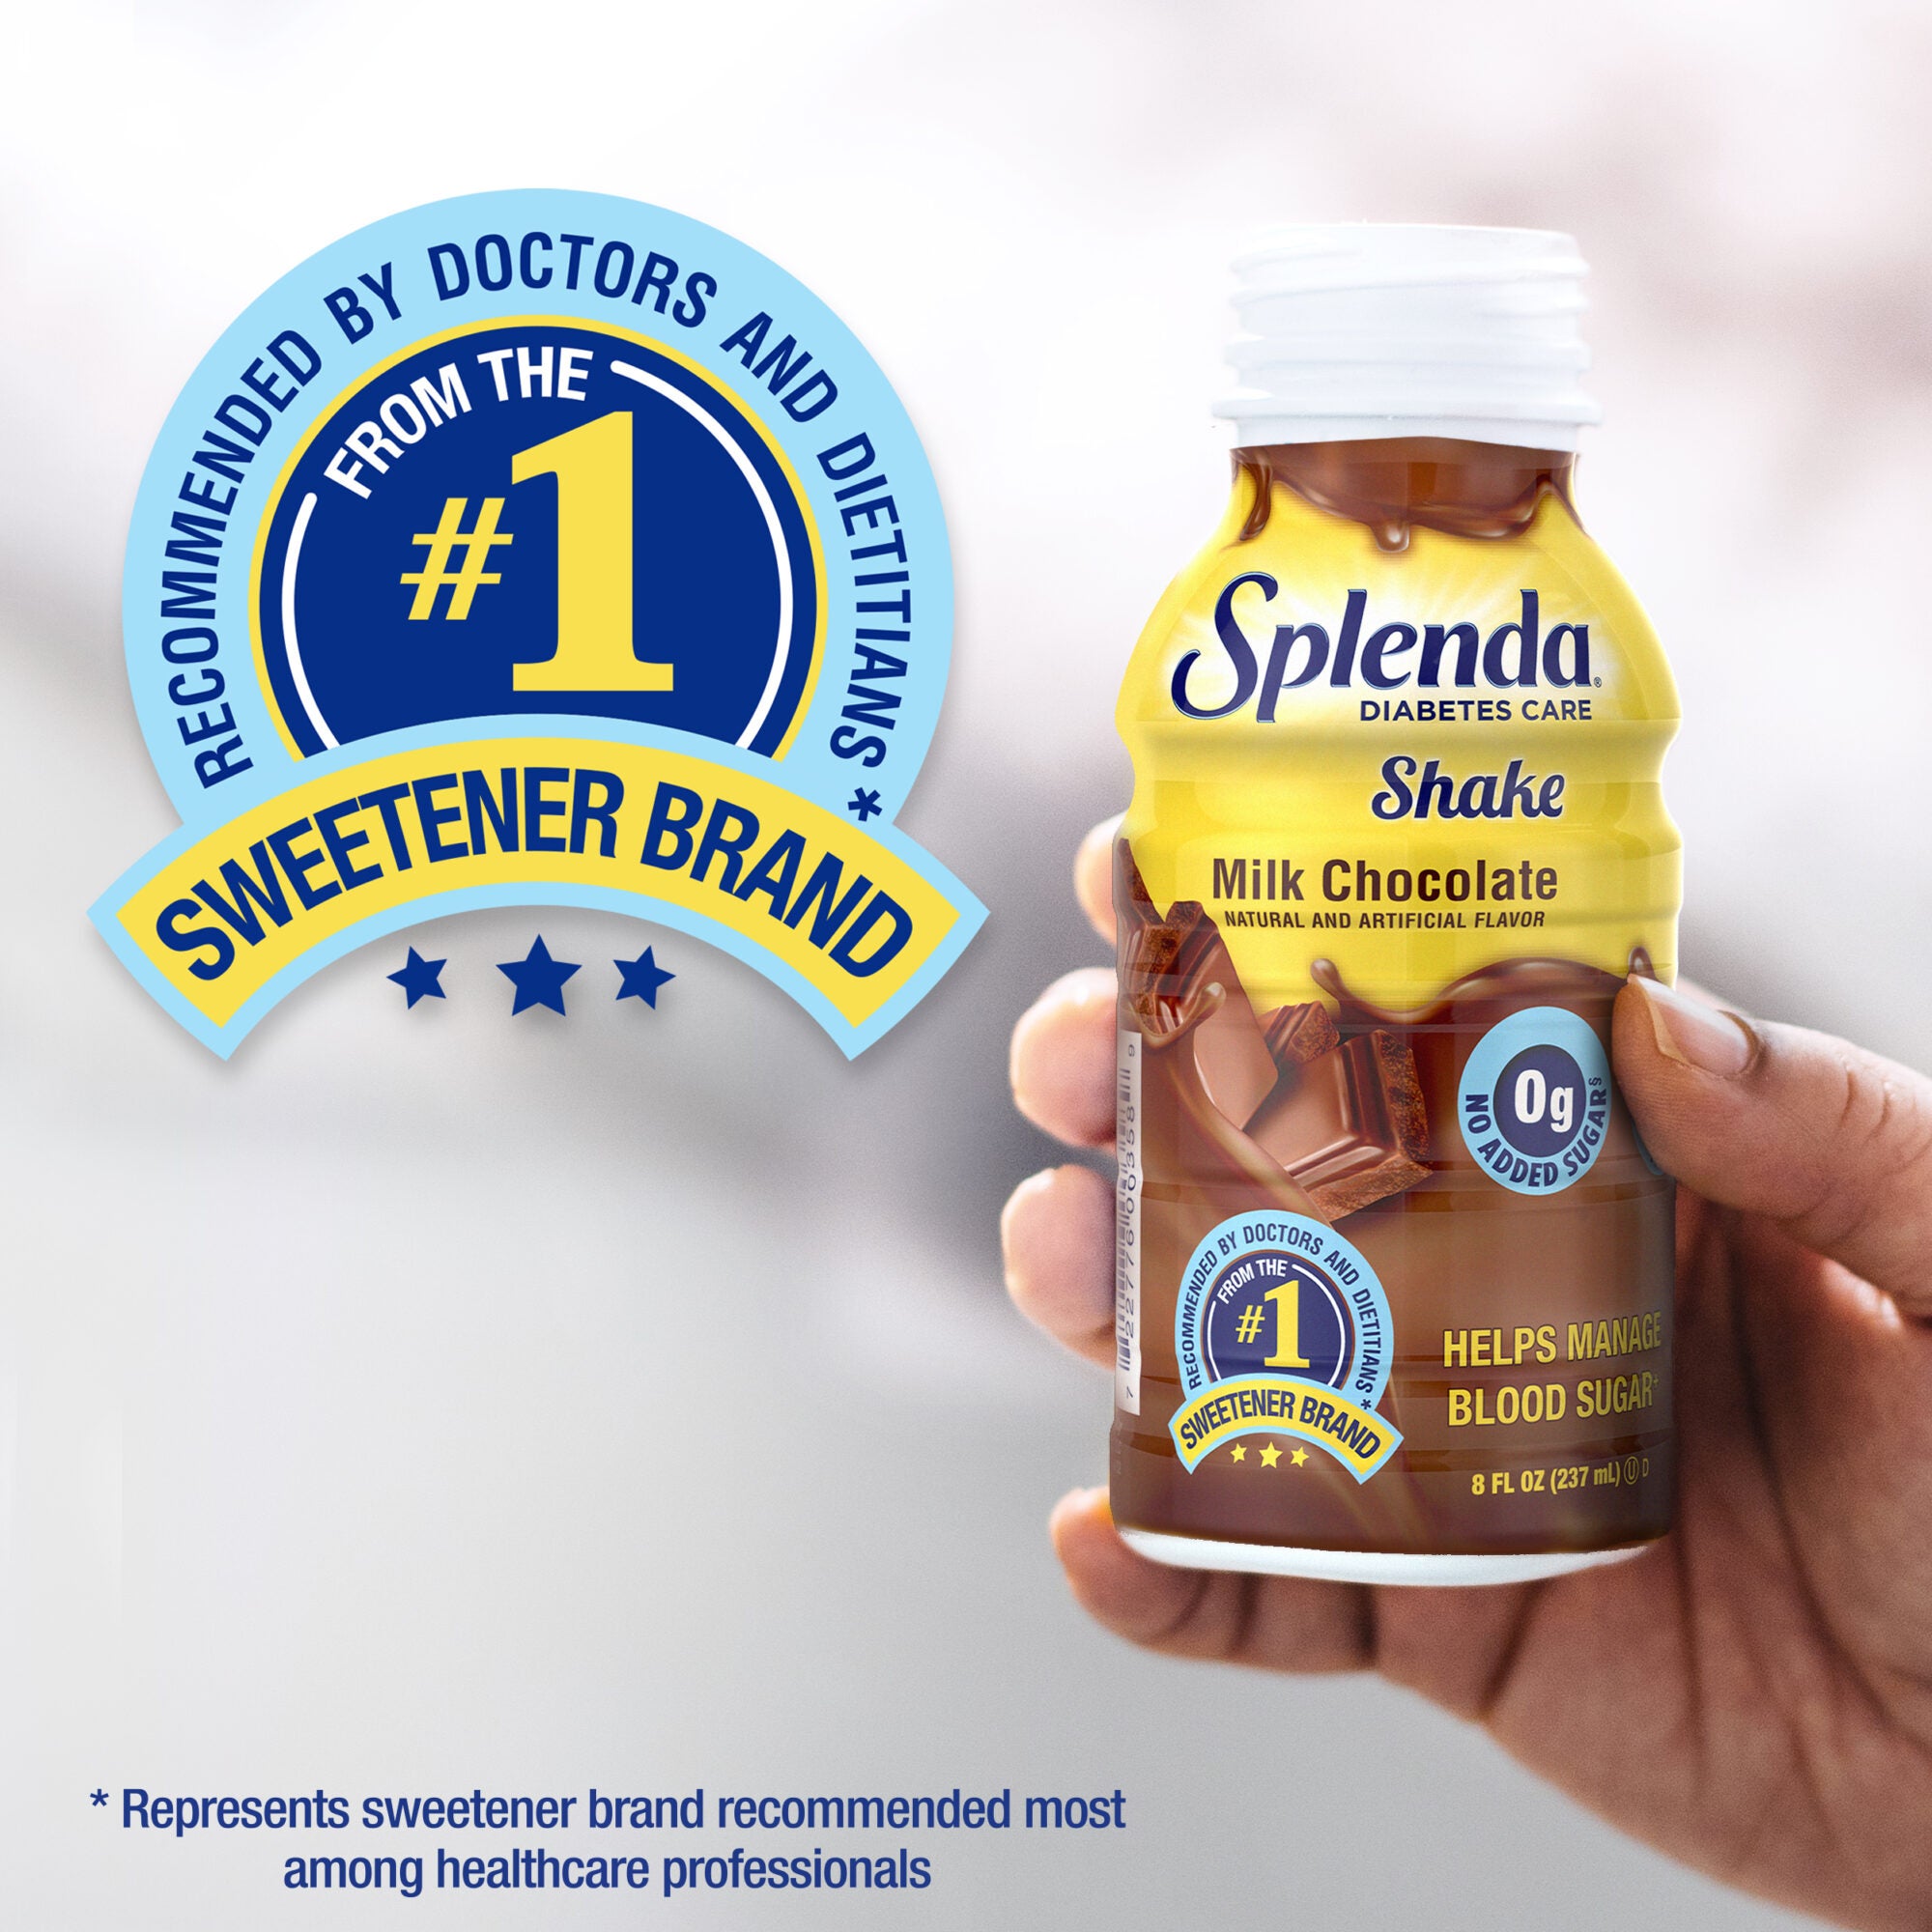 Splenda® Milk Chocolate Diabetes Care Shakes - From The #1 Sweetener Brand